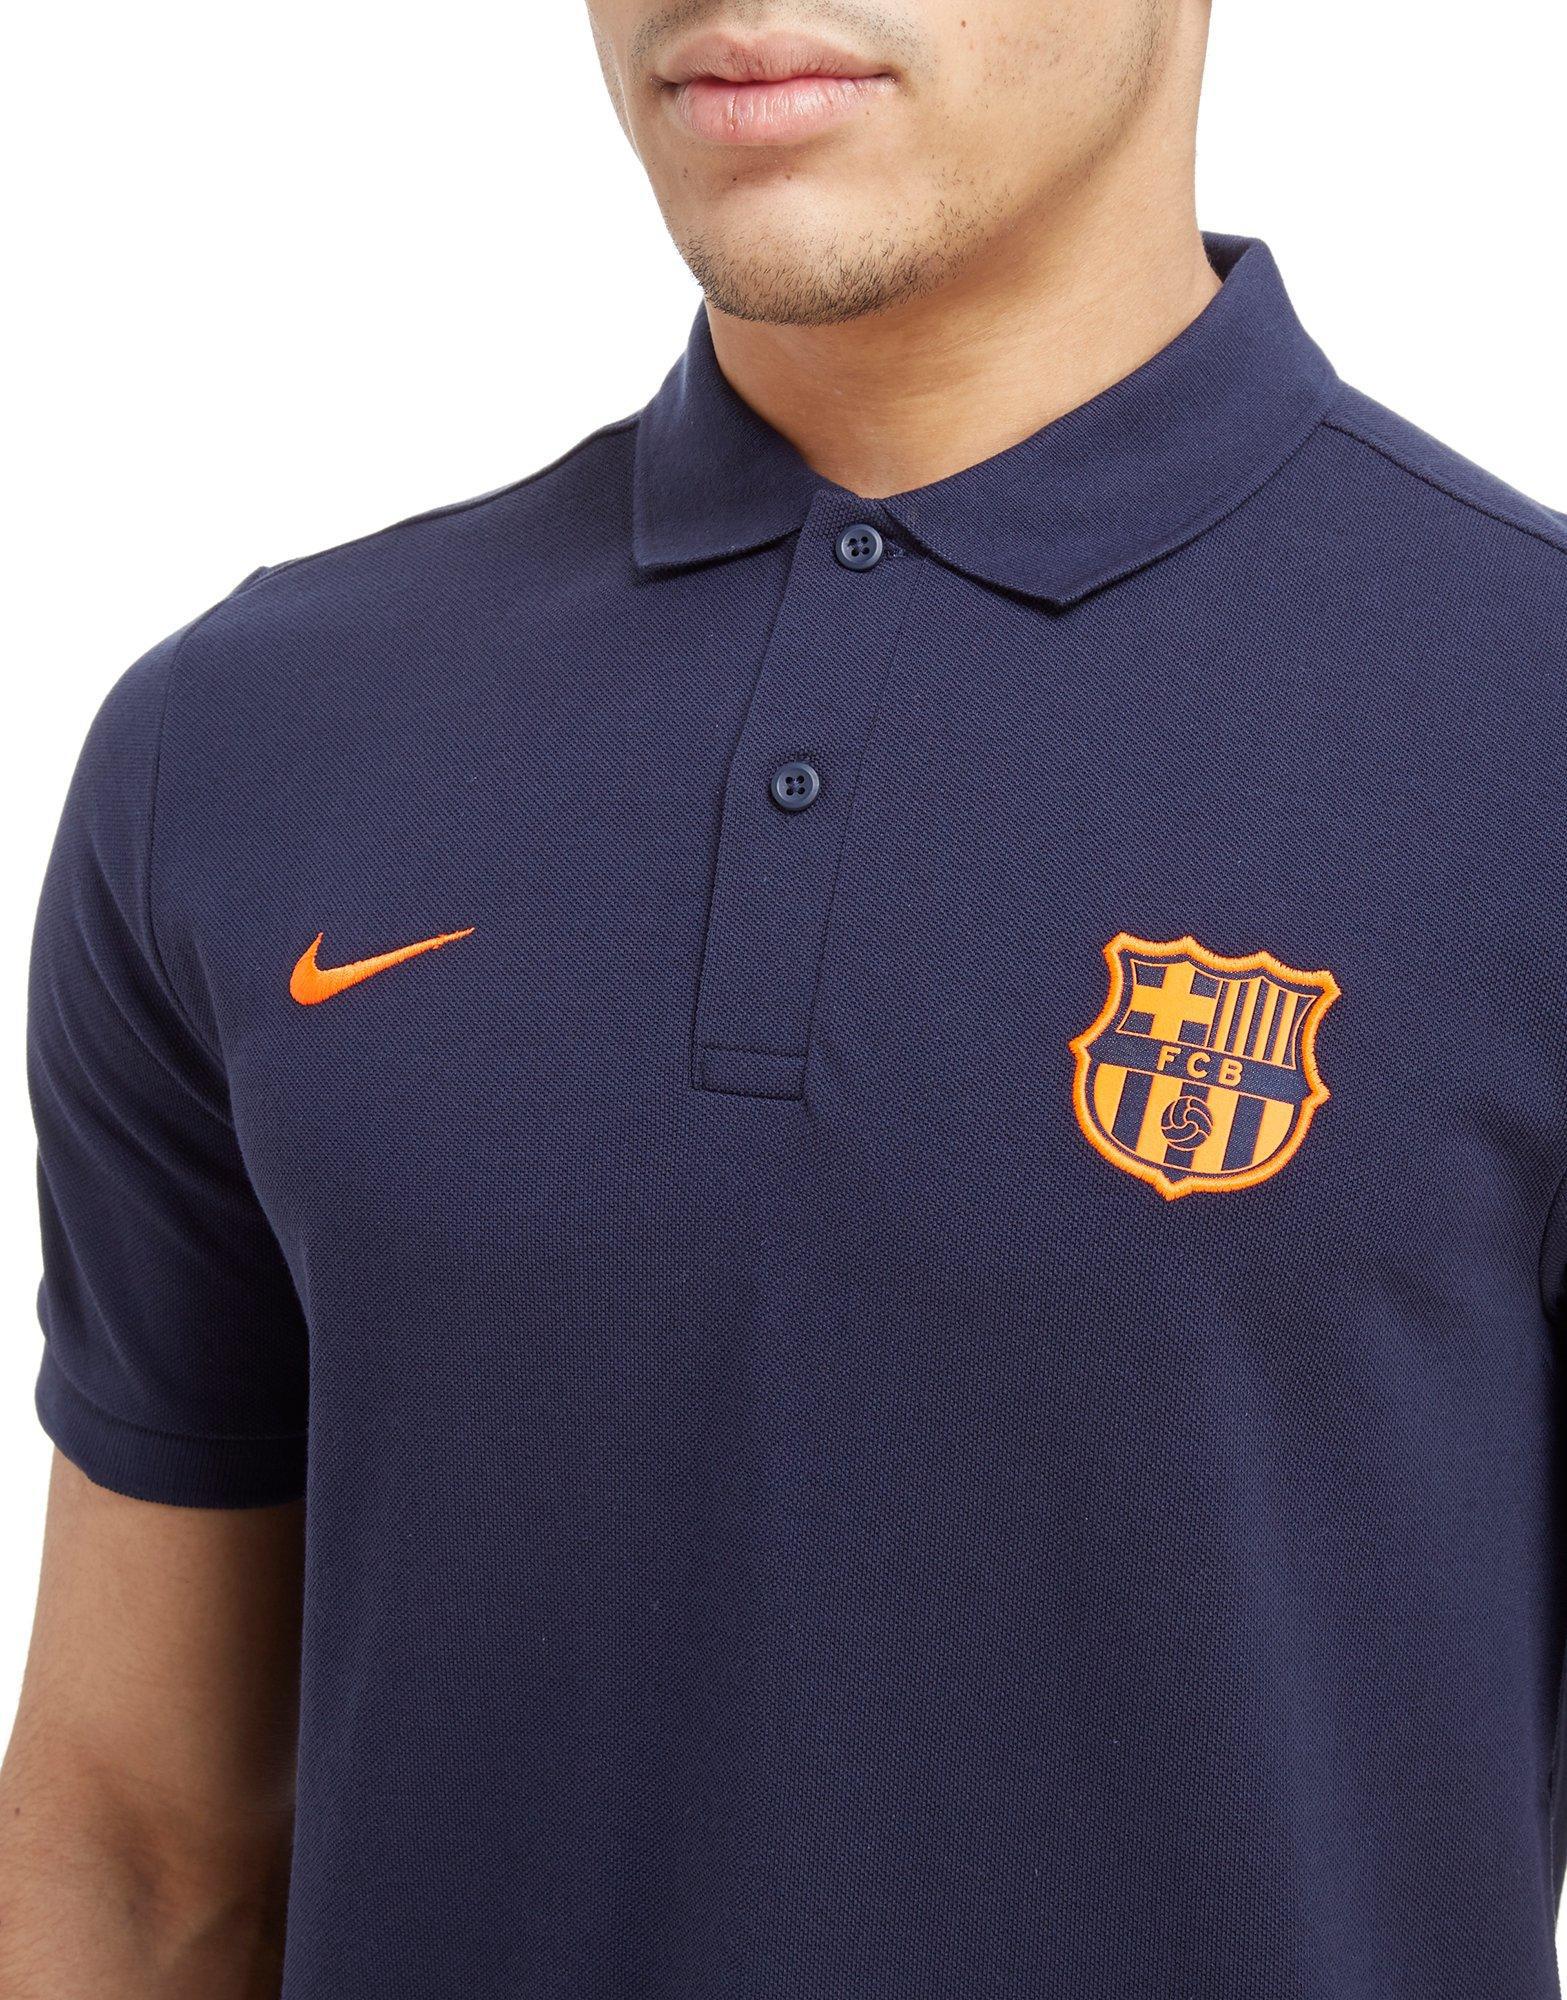 Buy > fc barcelona polo t shirt > in stock